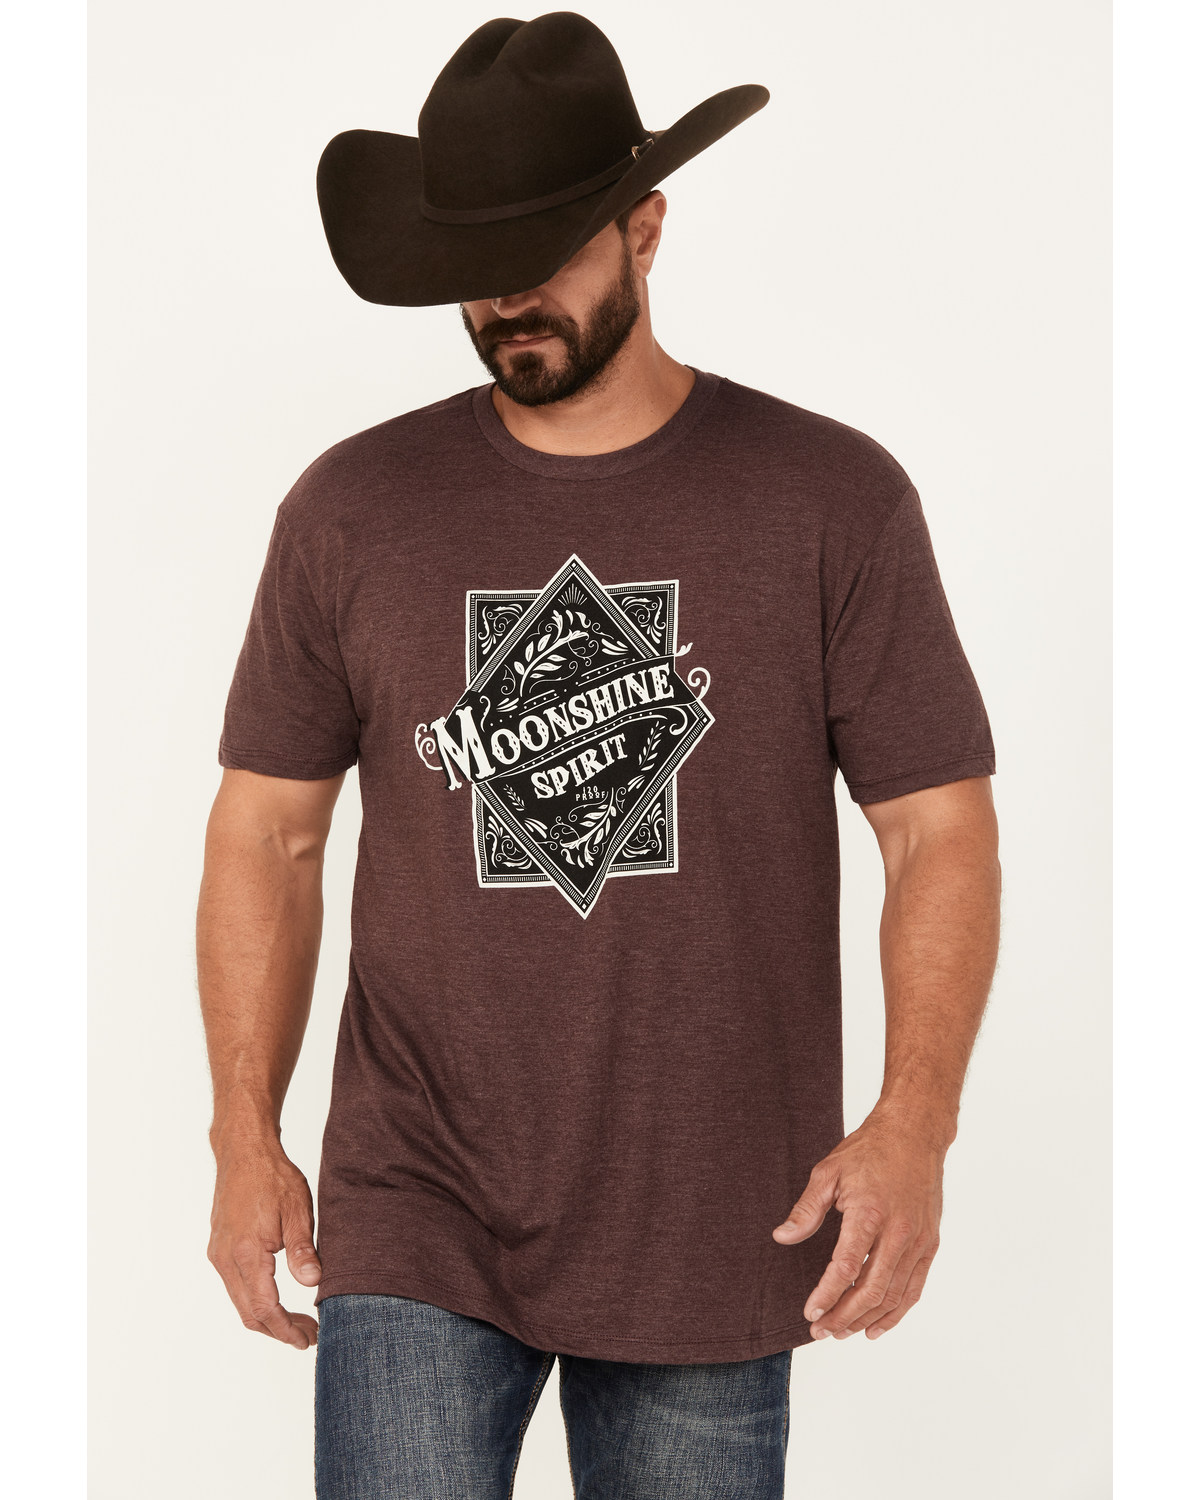 Moonshine Spirit Men's Diamond Short Sleeve Graphic T-Shirt